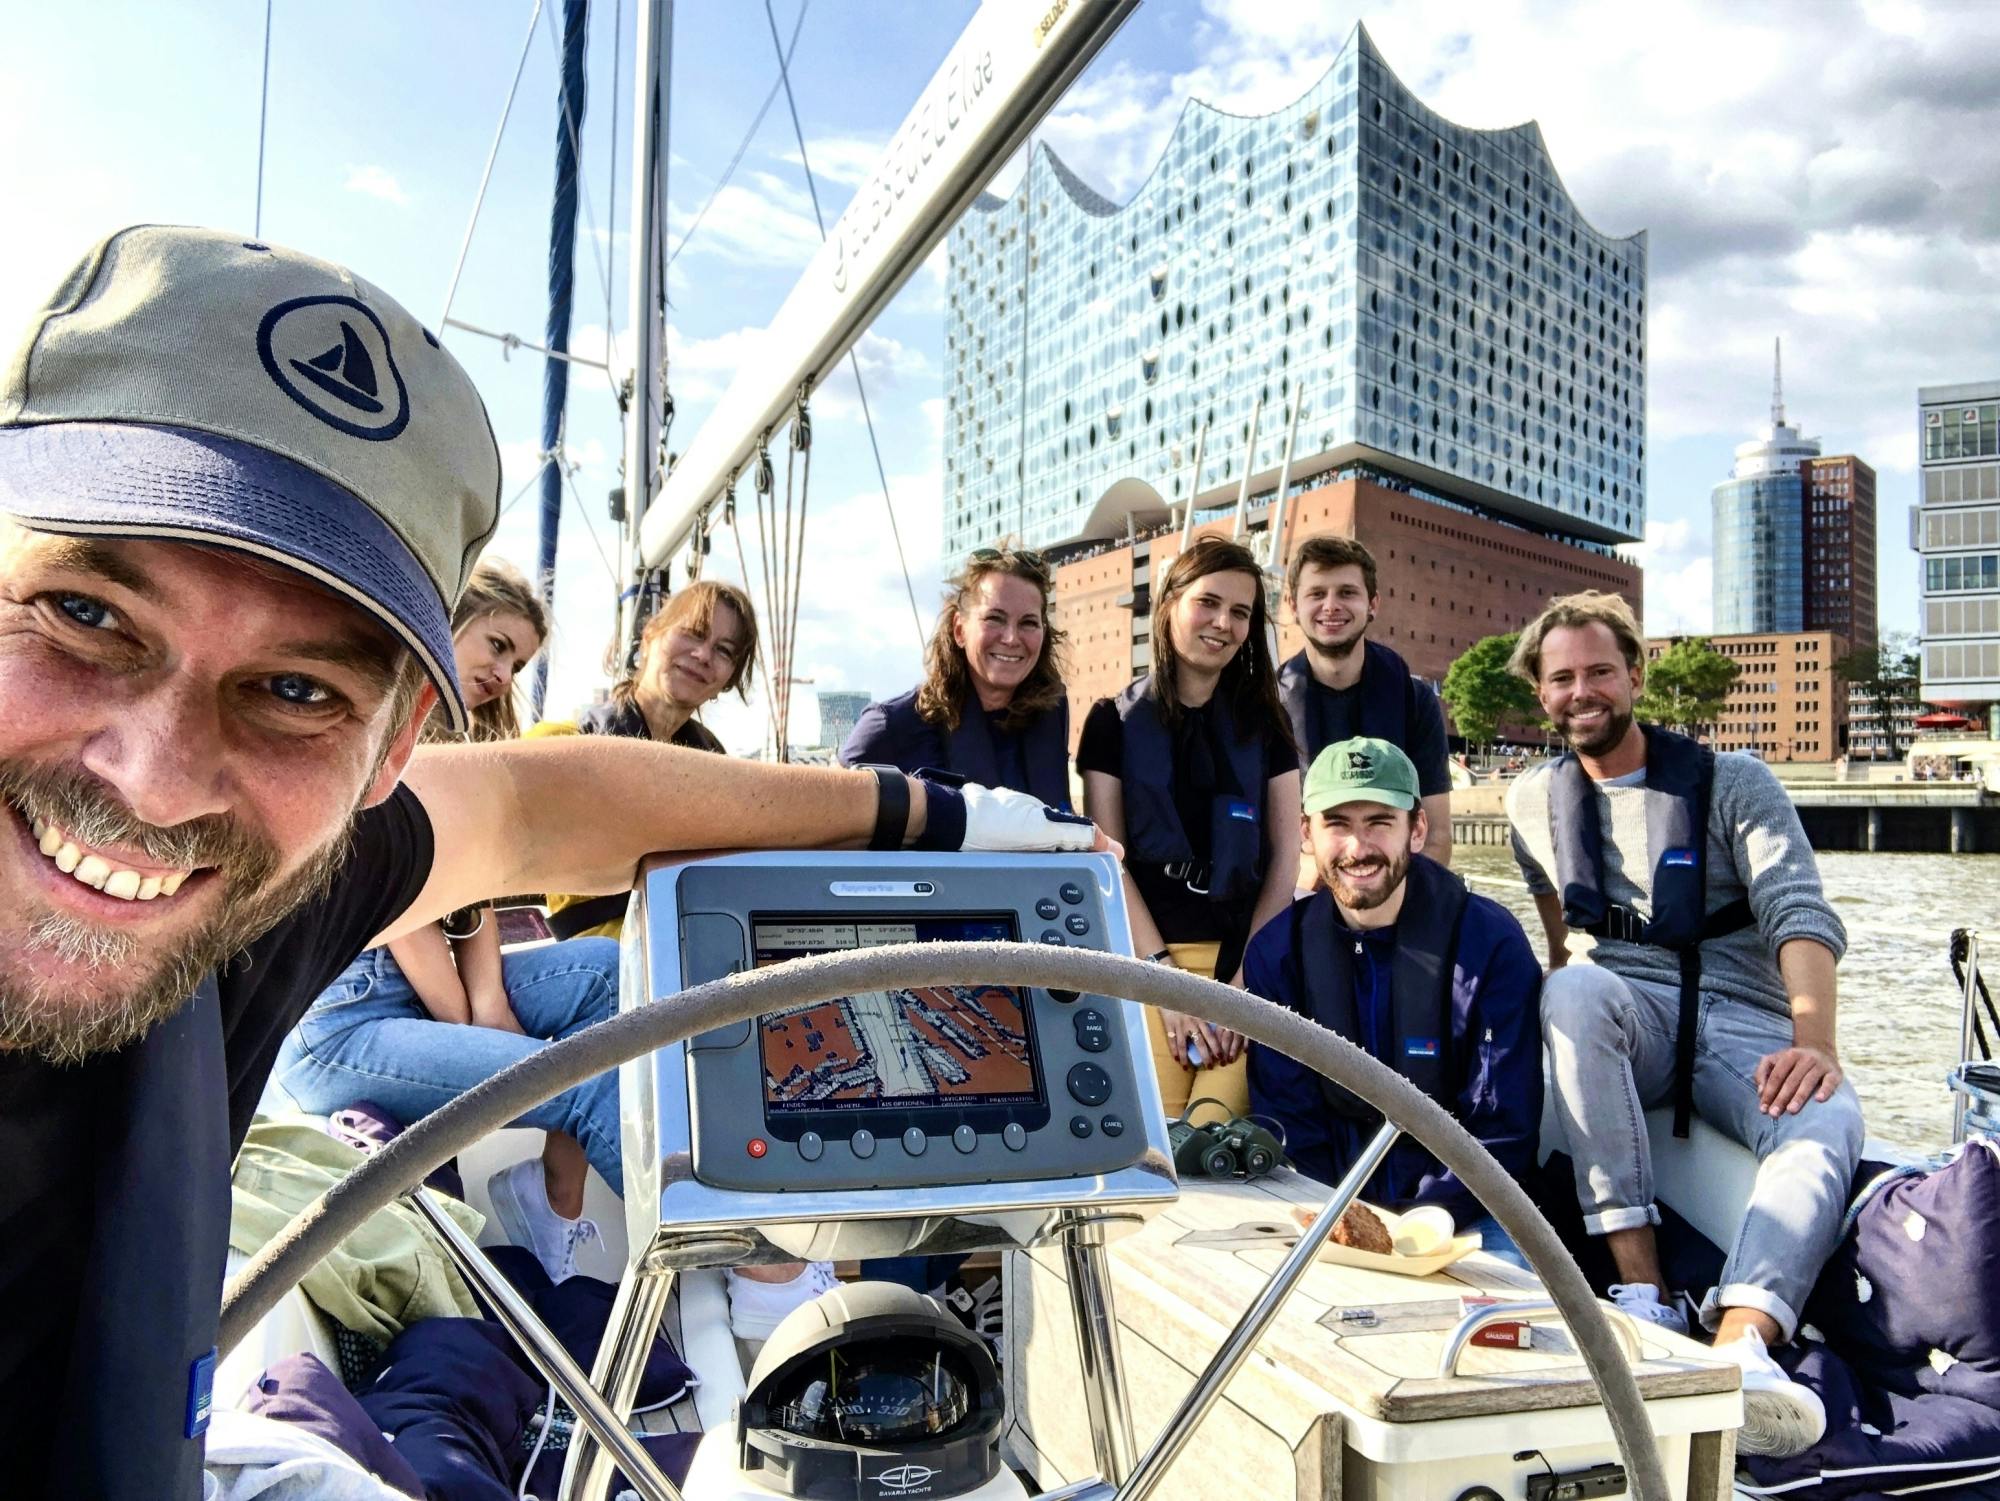 Sailing and Cruising  in the Port of Hamburg